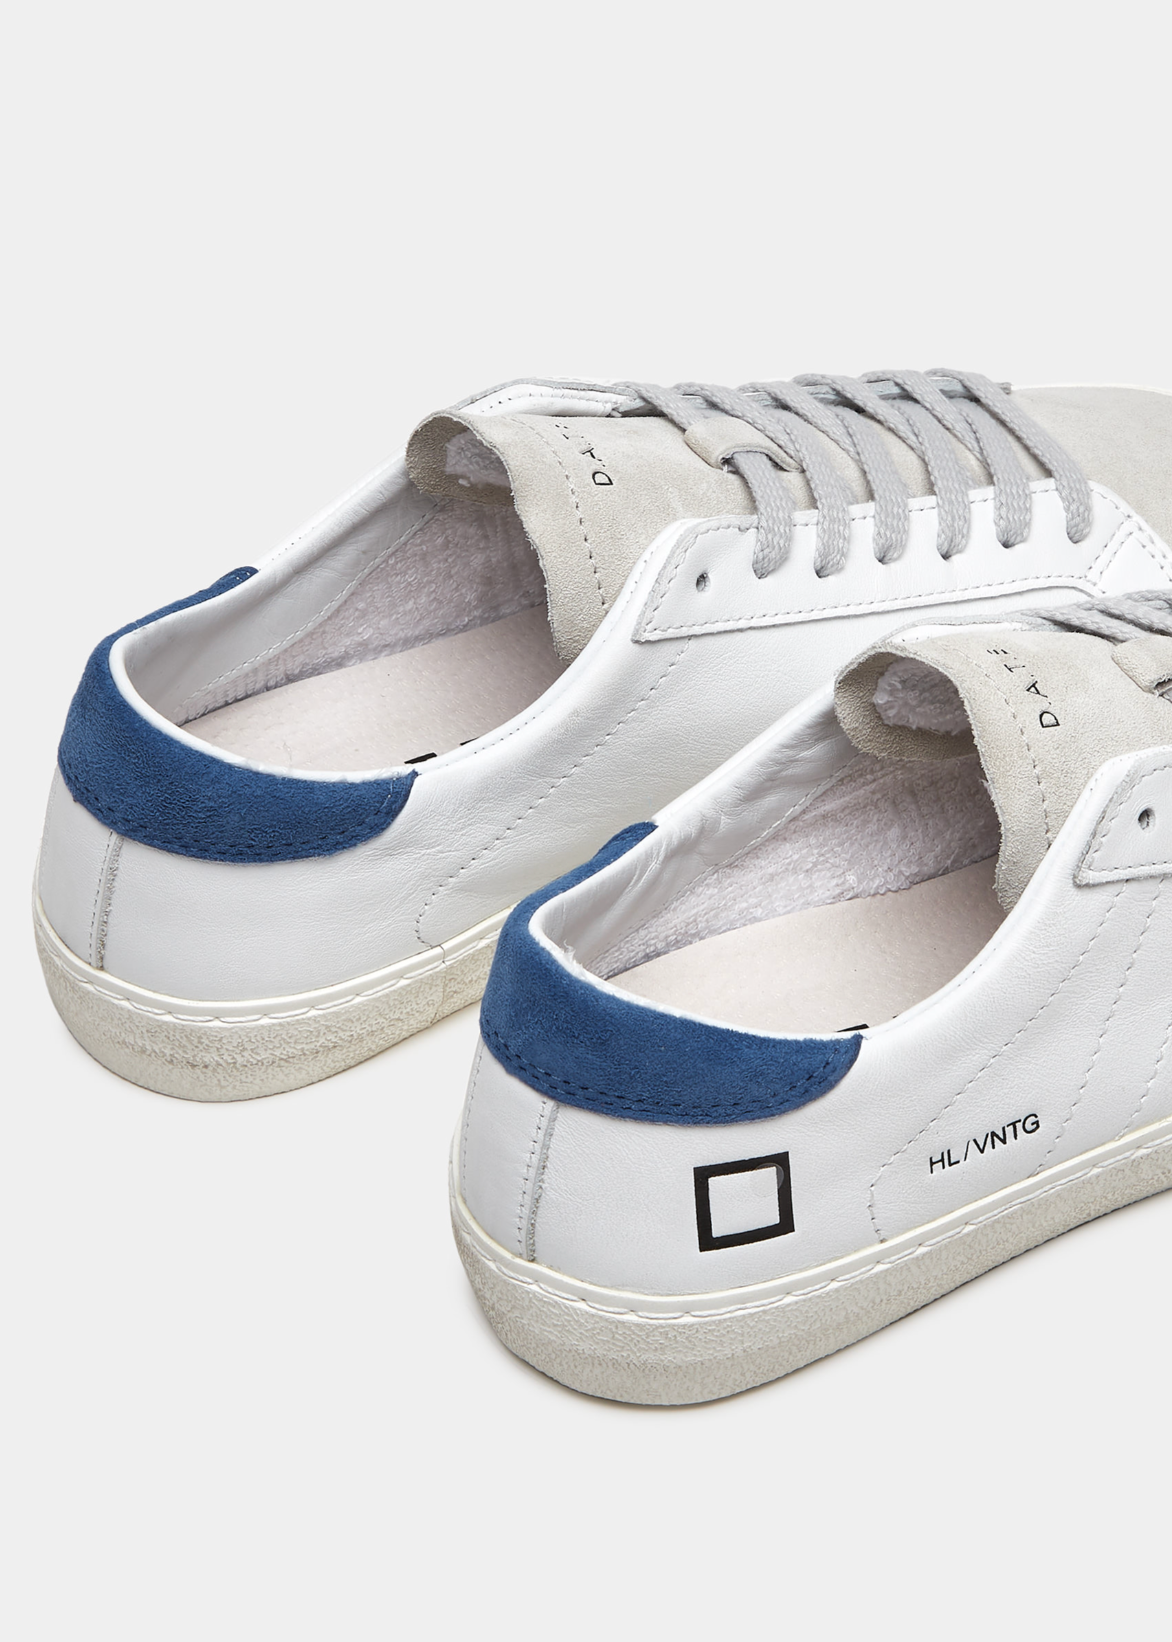 Hill Low Vintage Calf Sneakers - White/Bluette